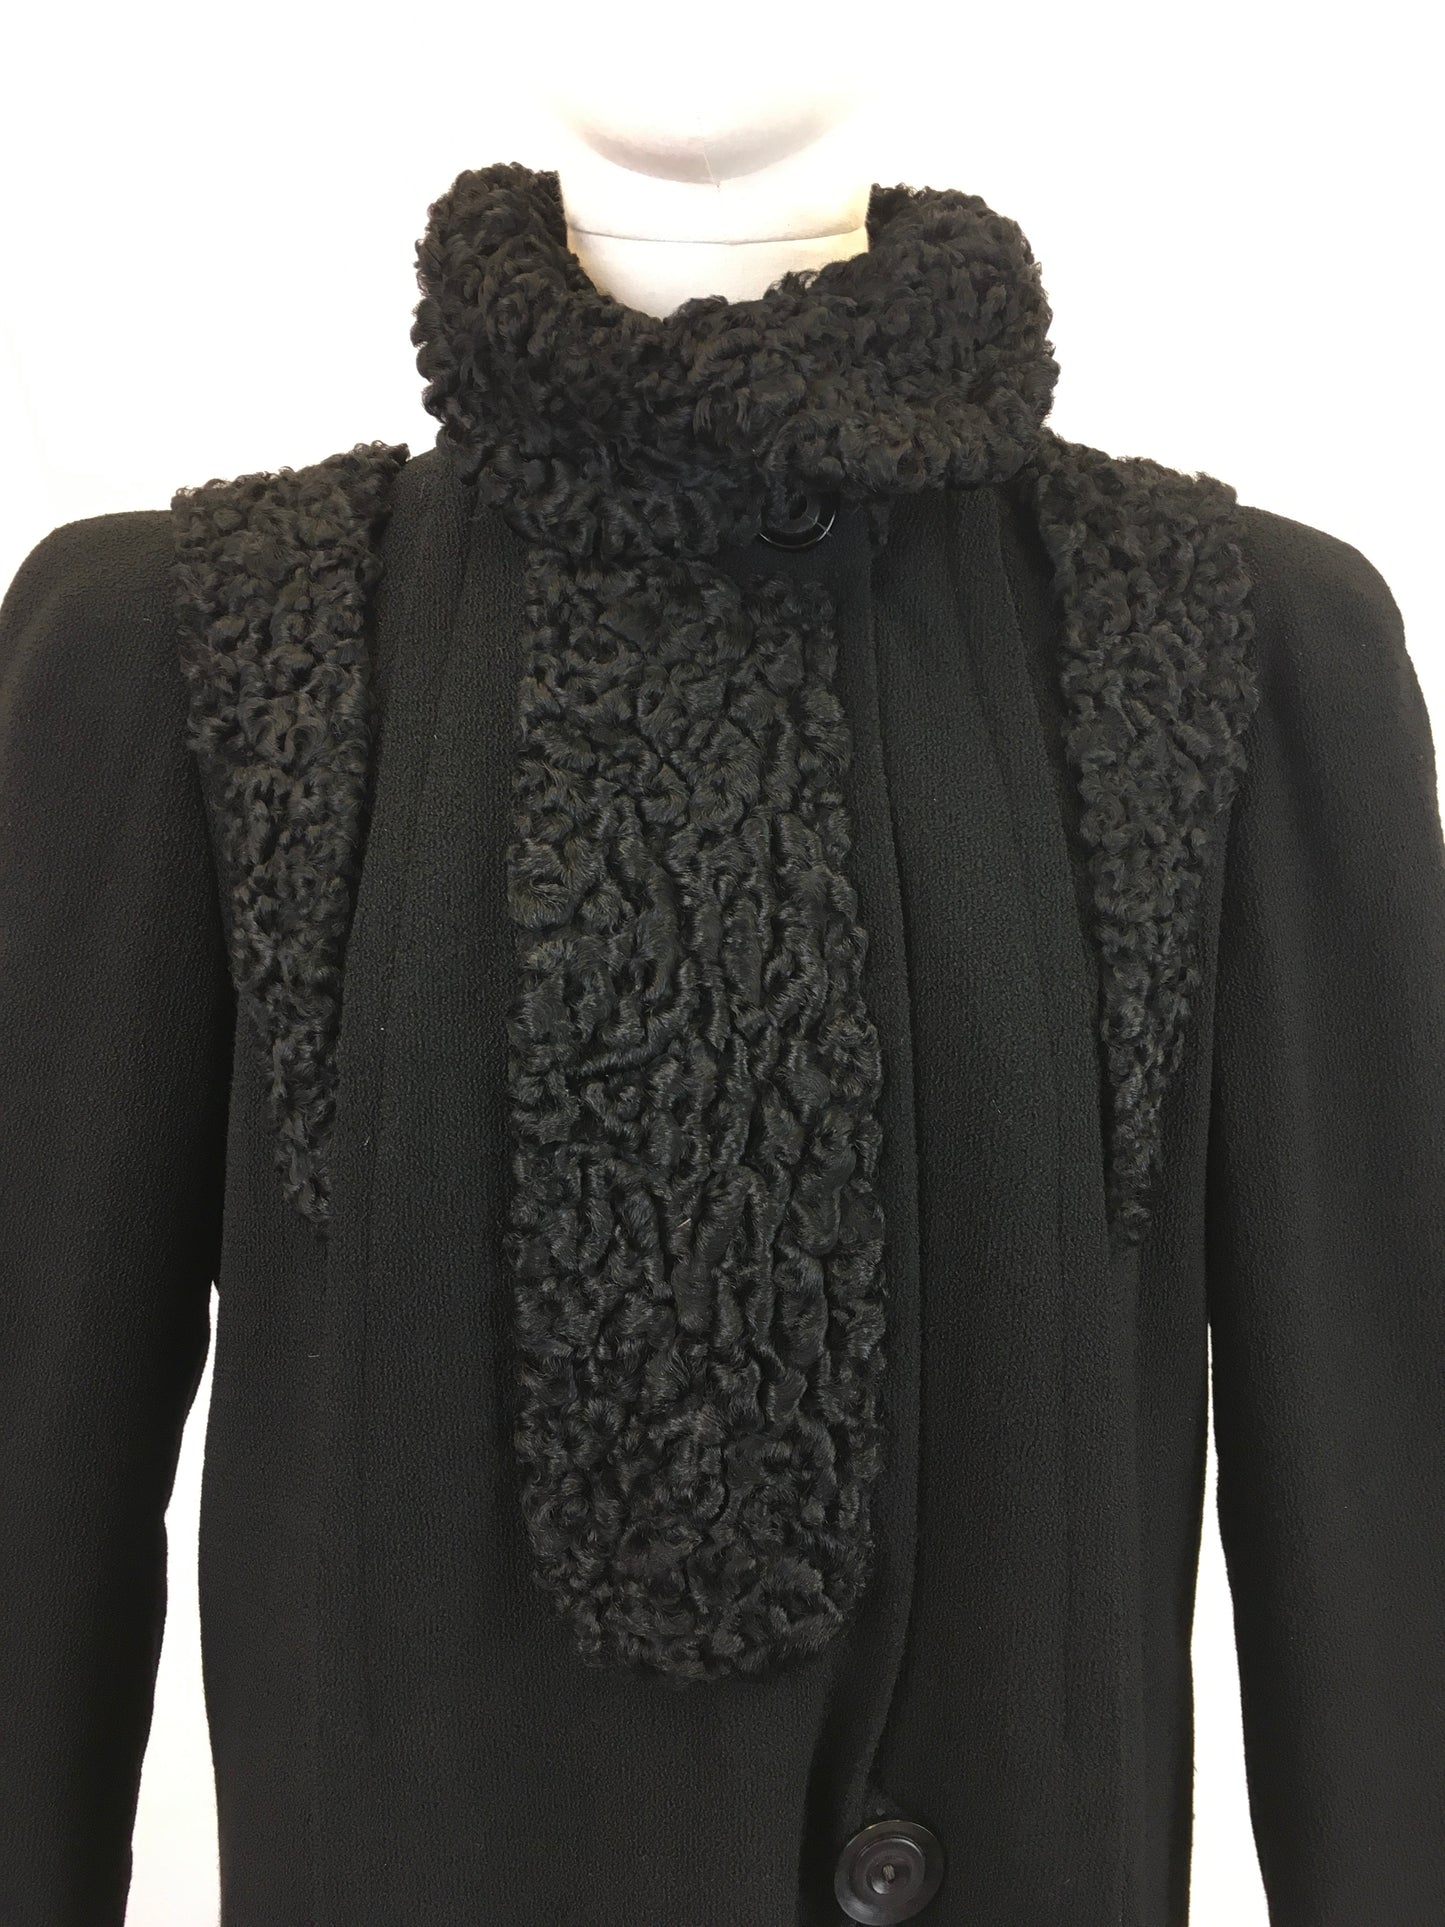 Original 1930's Sensational Black Coat - With Stunning Astrakhan Collar & Yokes